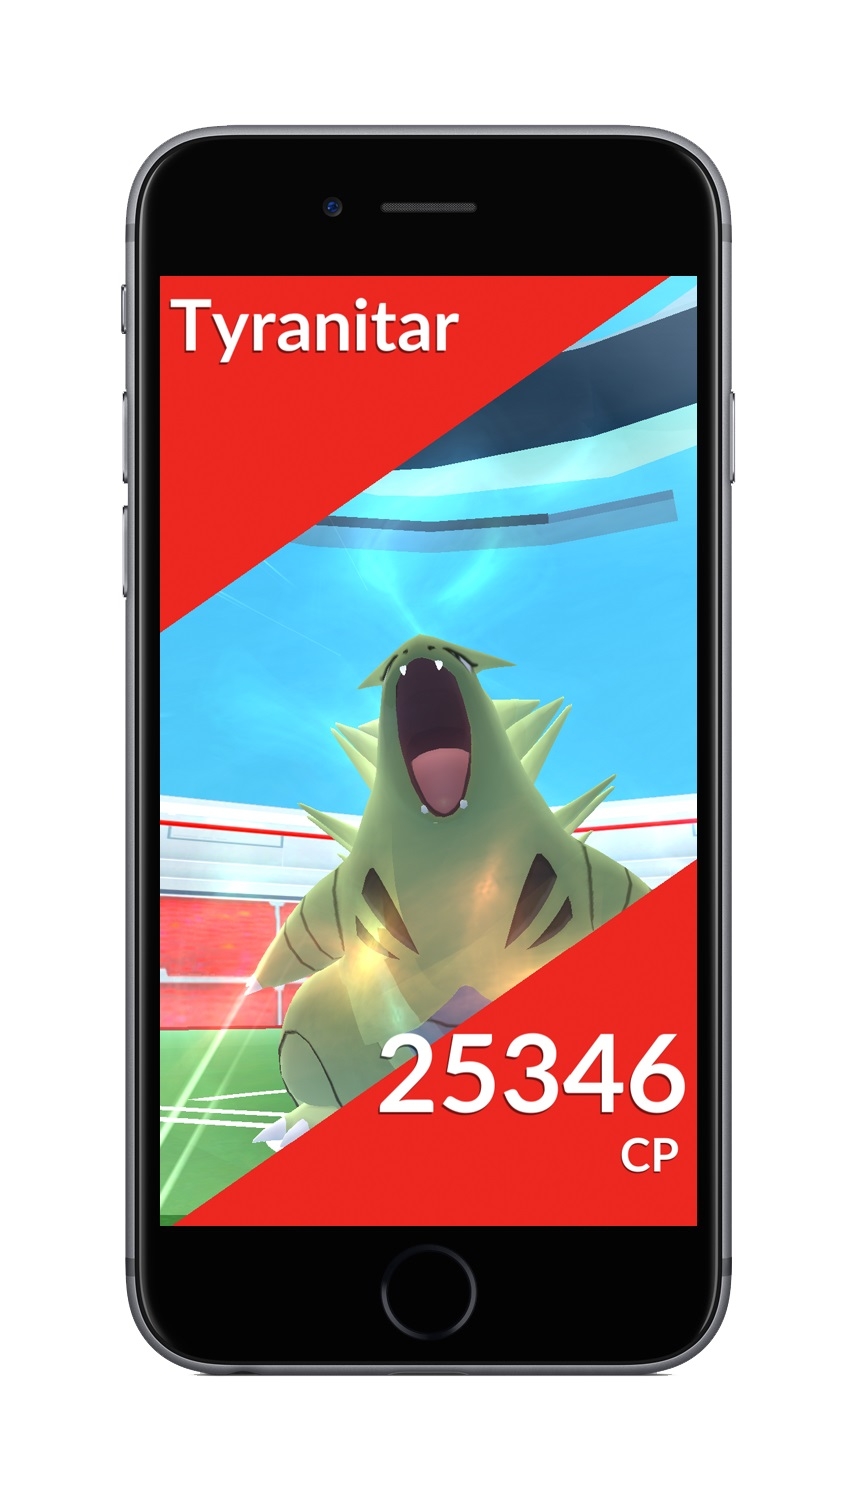 Pokémon Go raids confirmed